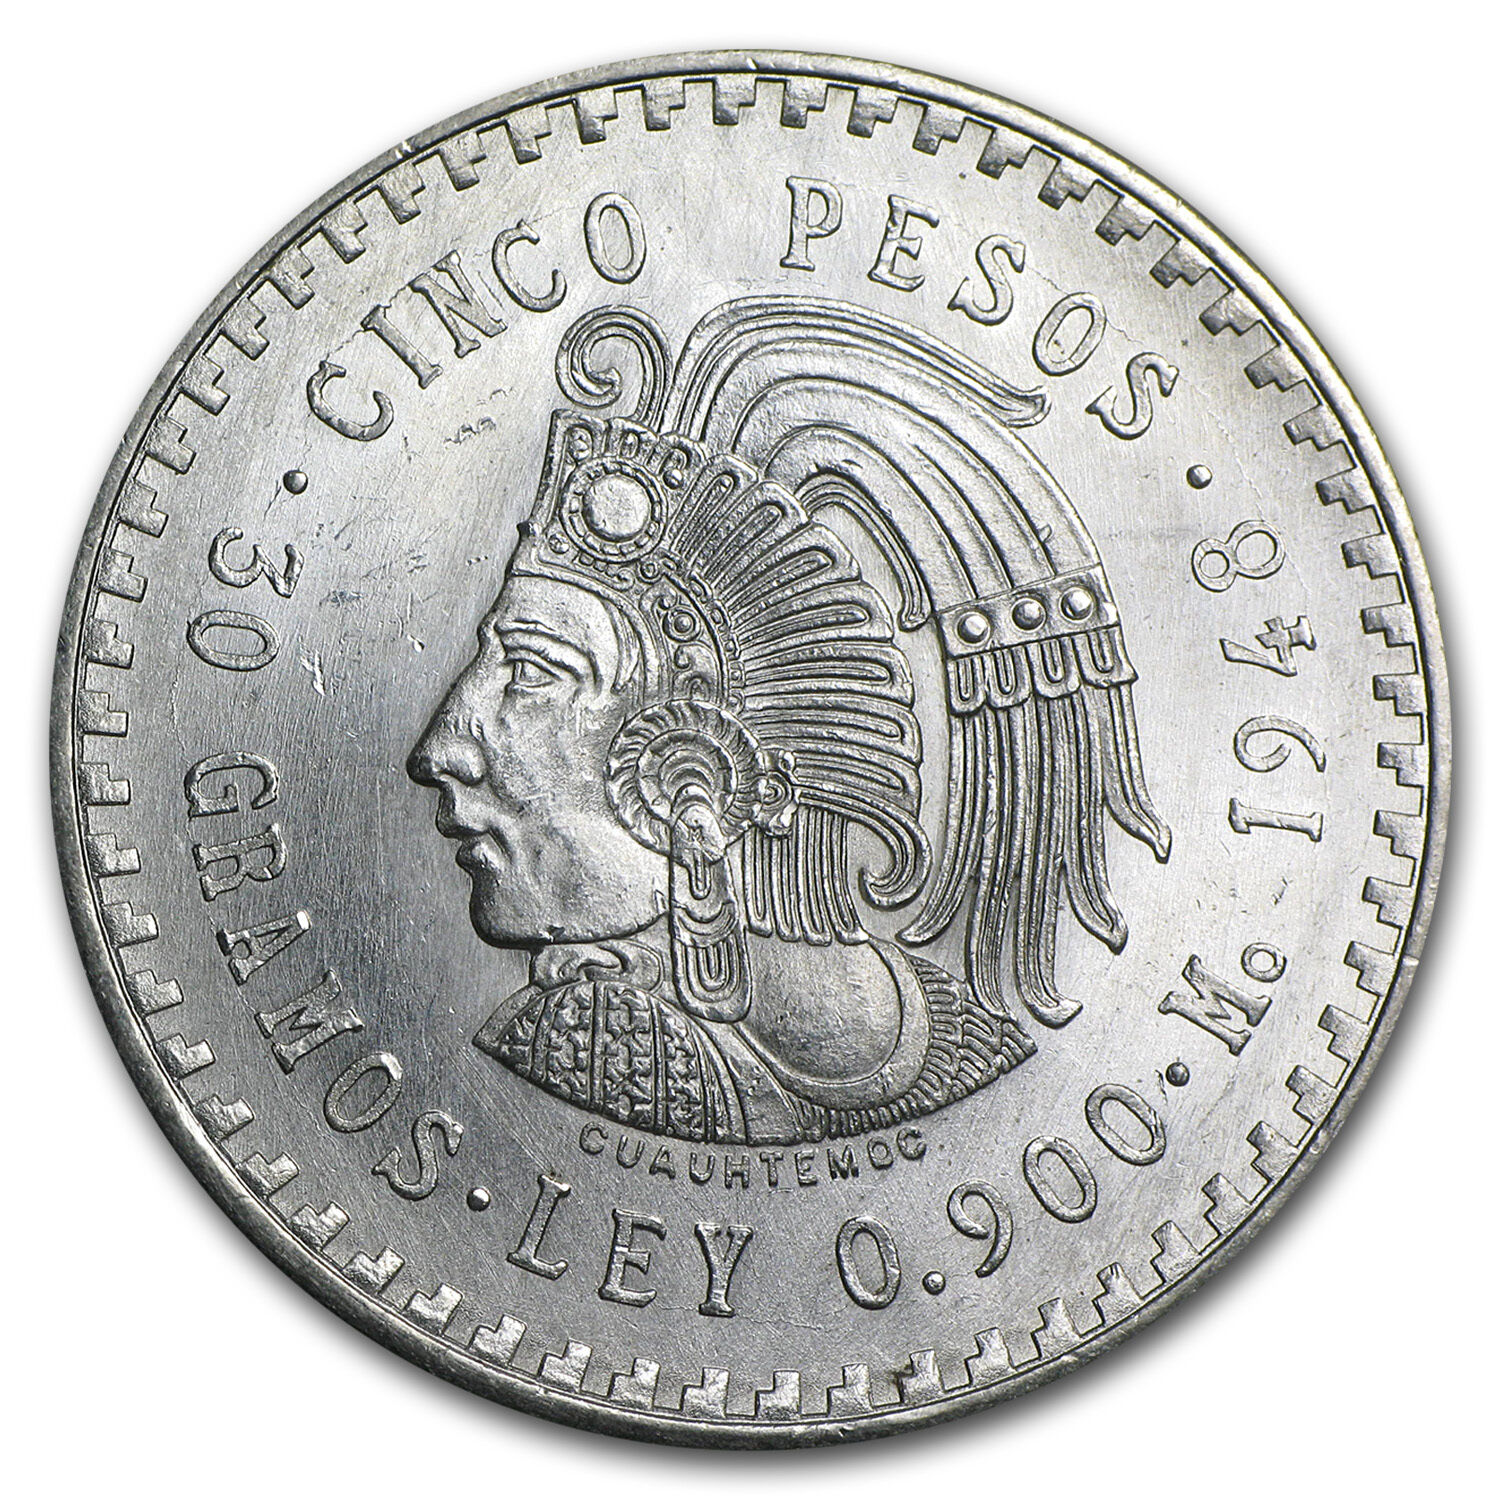 Mexican Silver 5 Pesos - Cuauhtemoc Design - Random Year Coin - SKU #8558